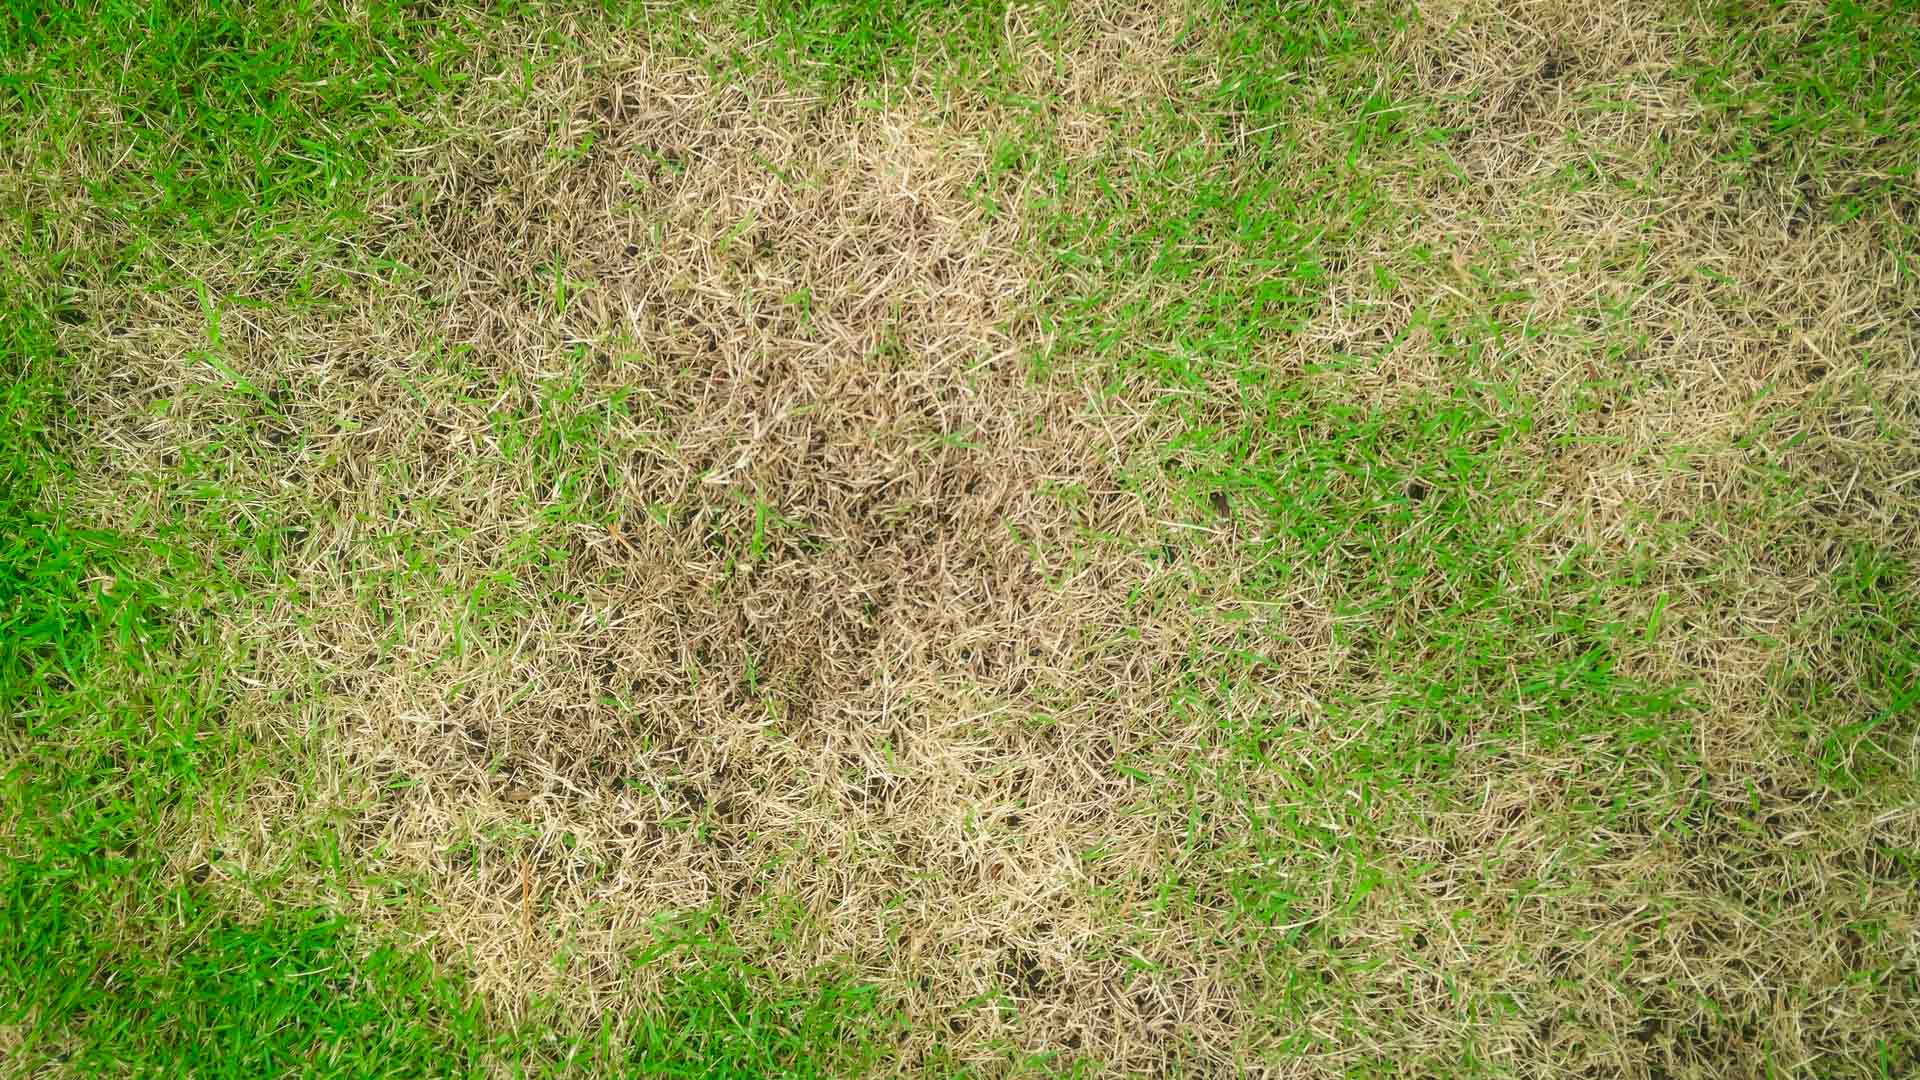 Badly diseased lawn left untreated in Fairfax, VA.